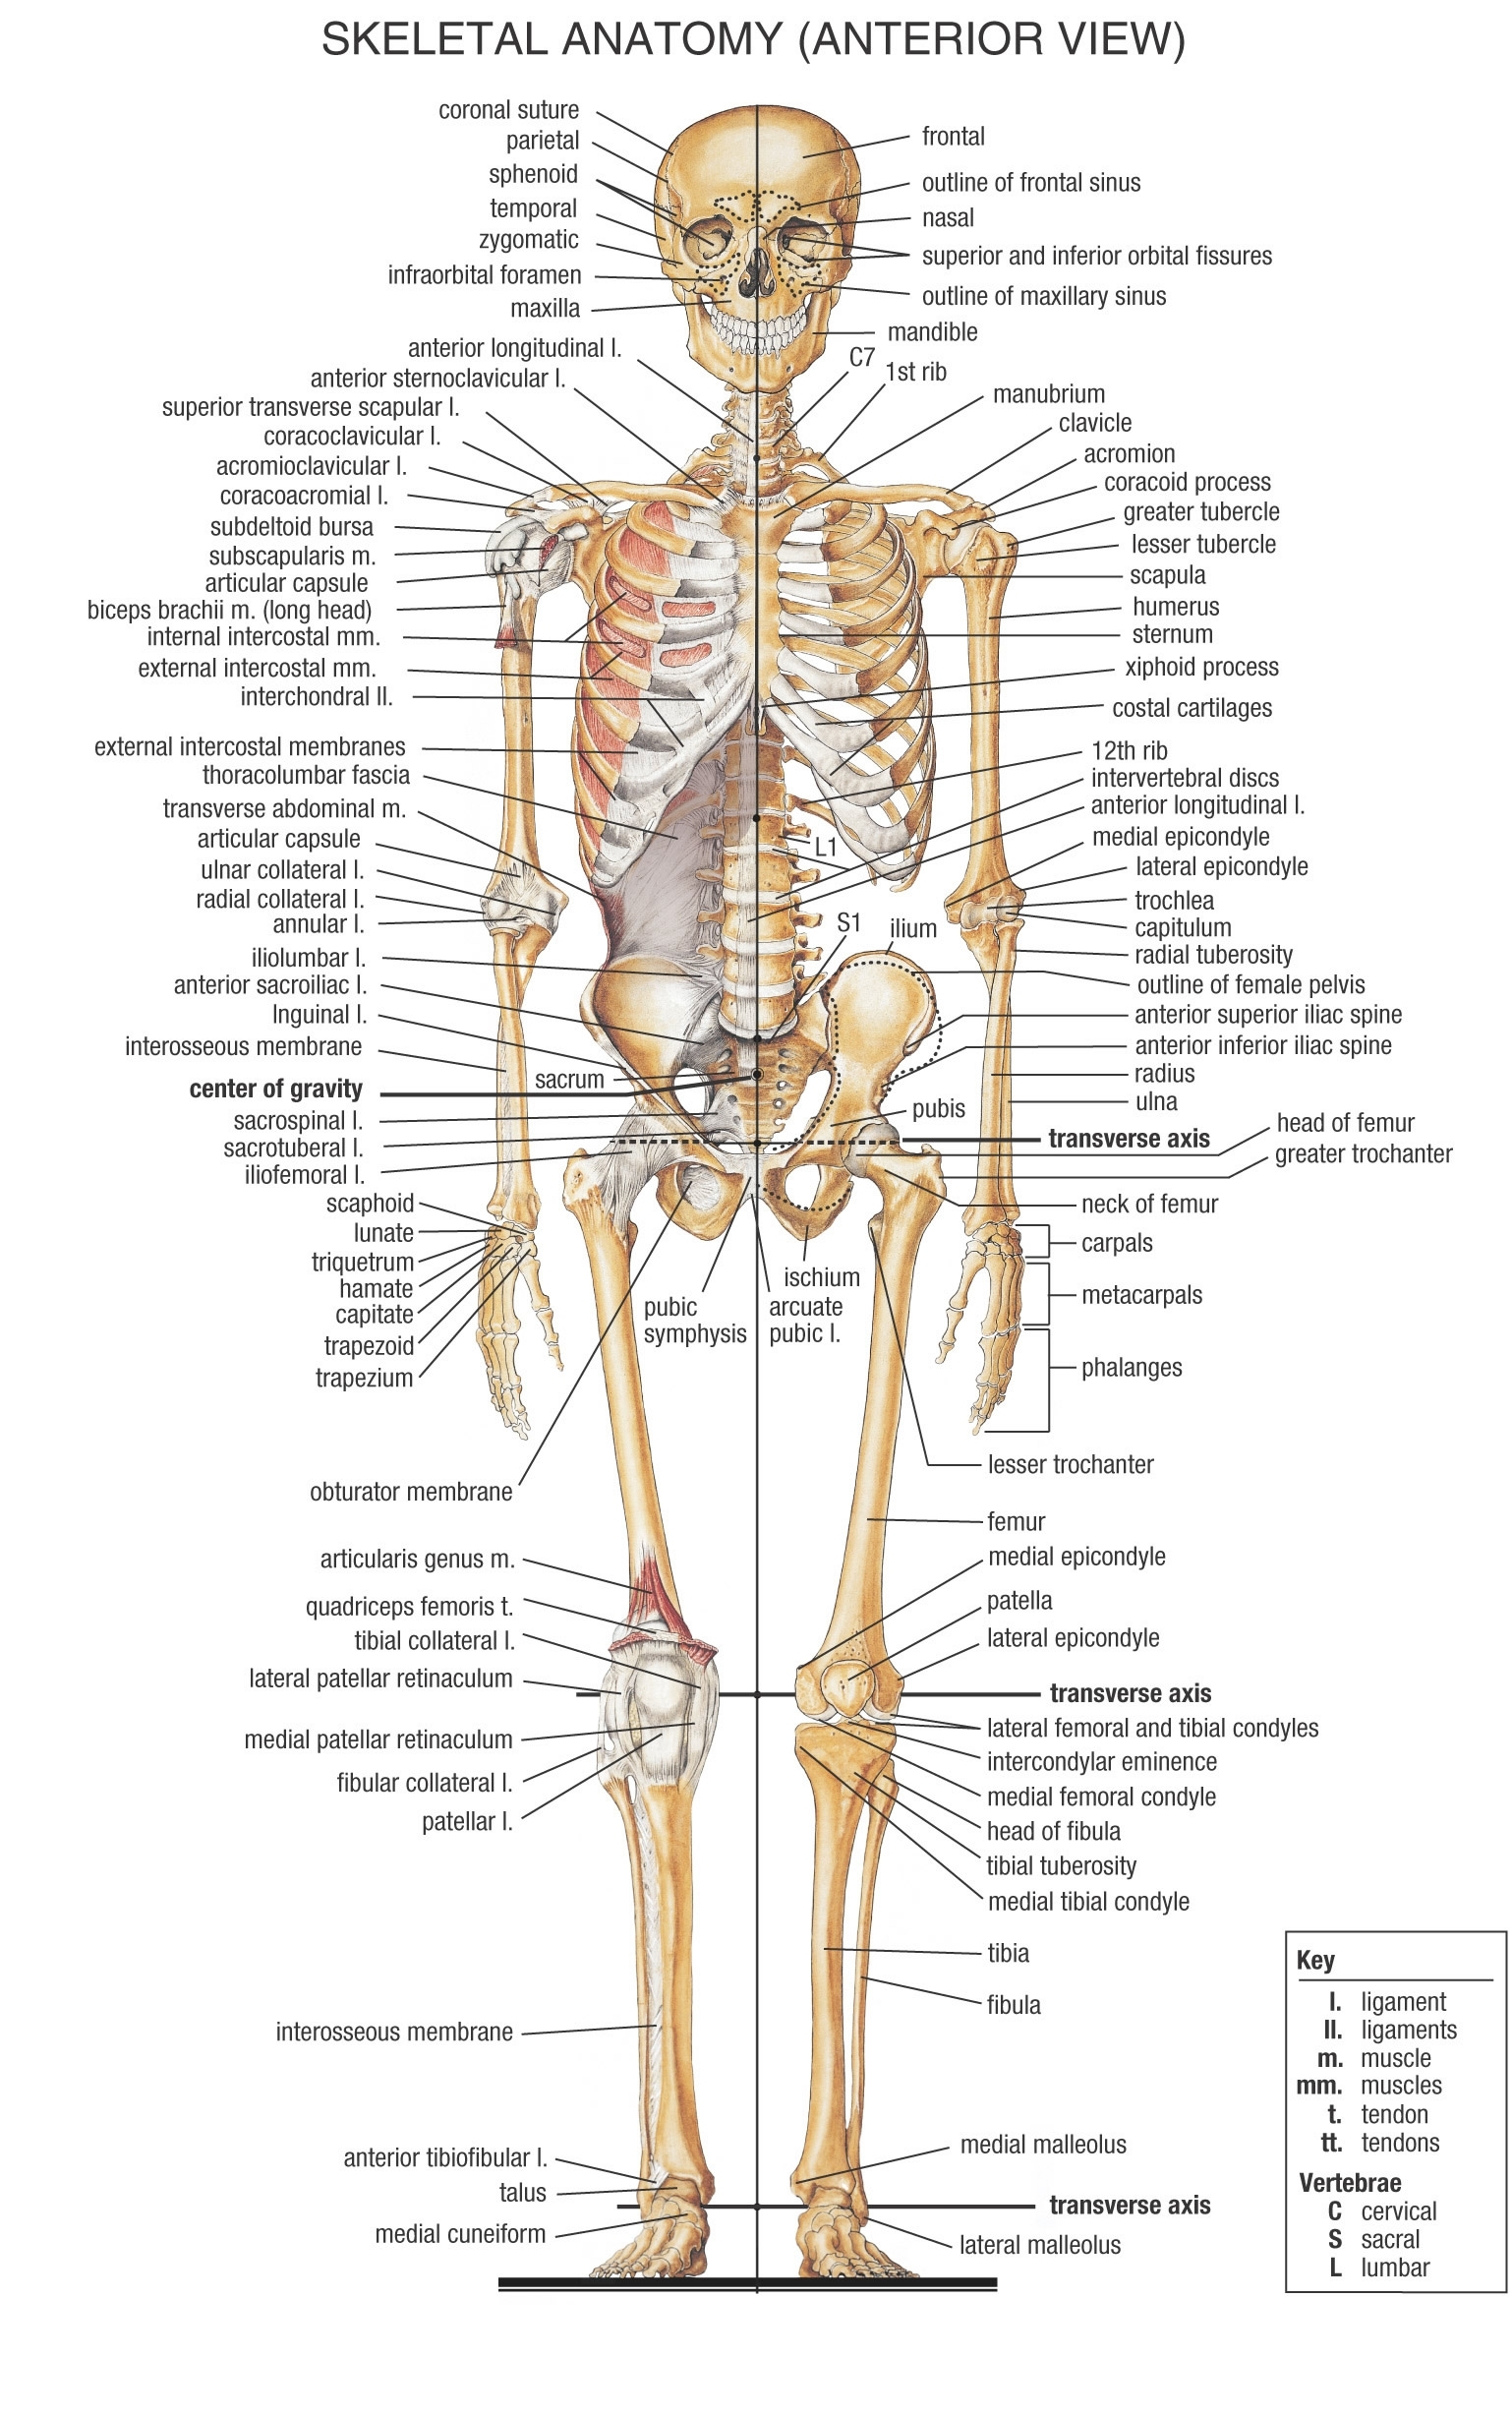 Wallpaper Desktop on Anatomy Human Body Art Bones Hd Wallpaper   Art   Fantasy   255526